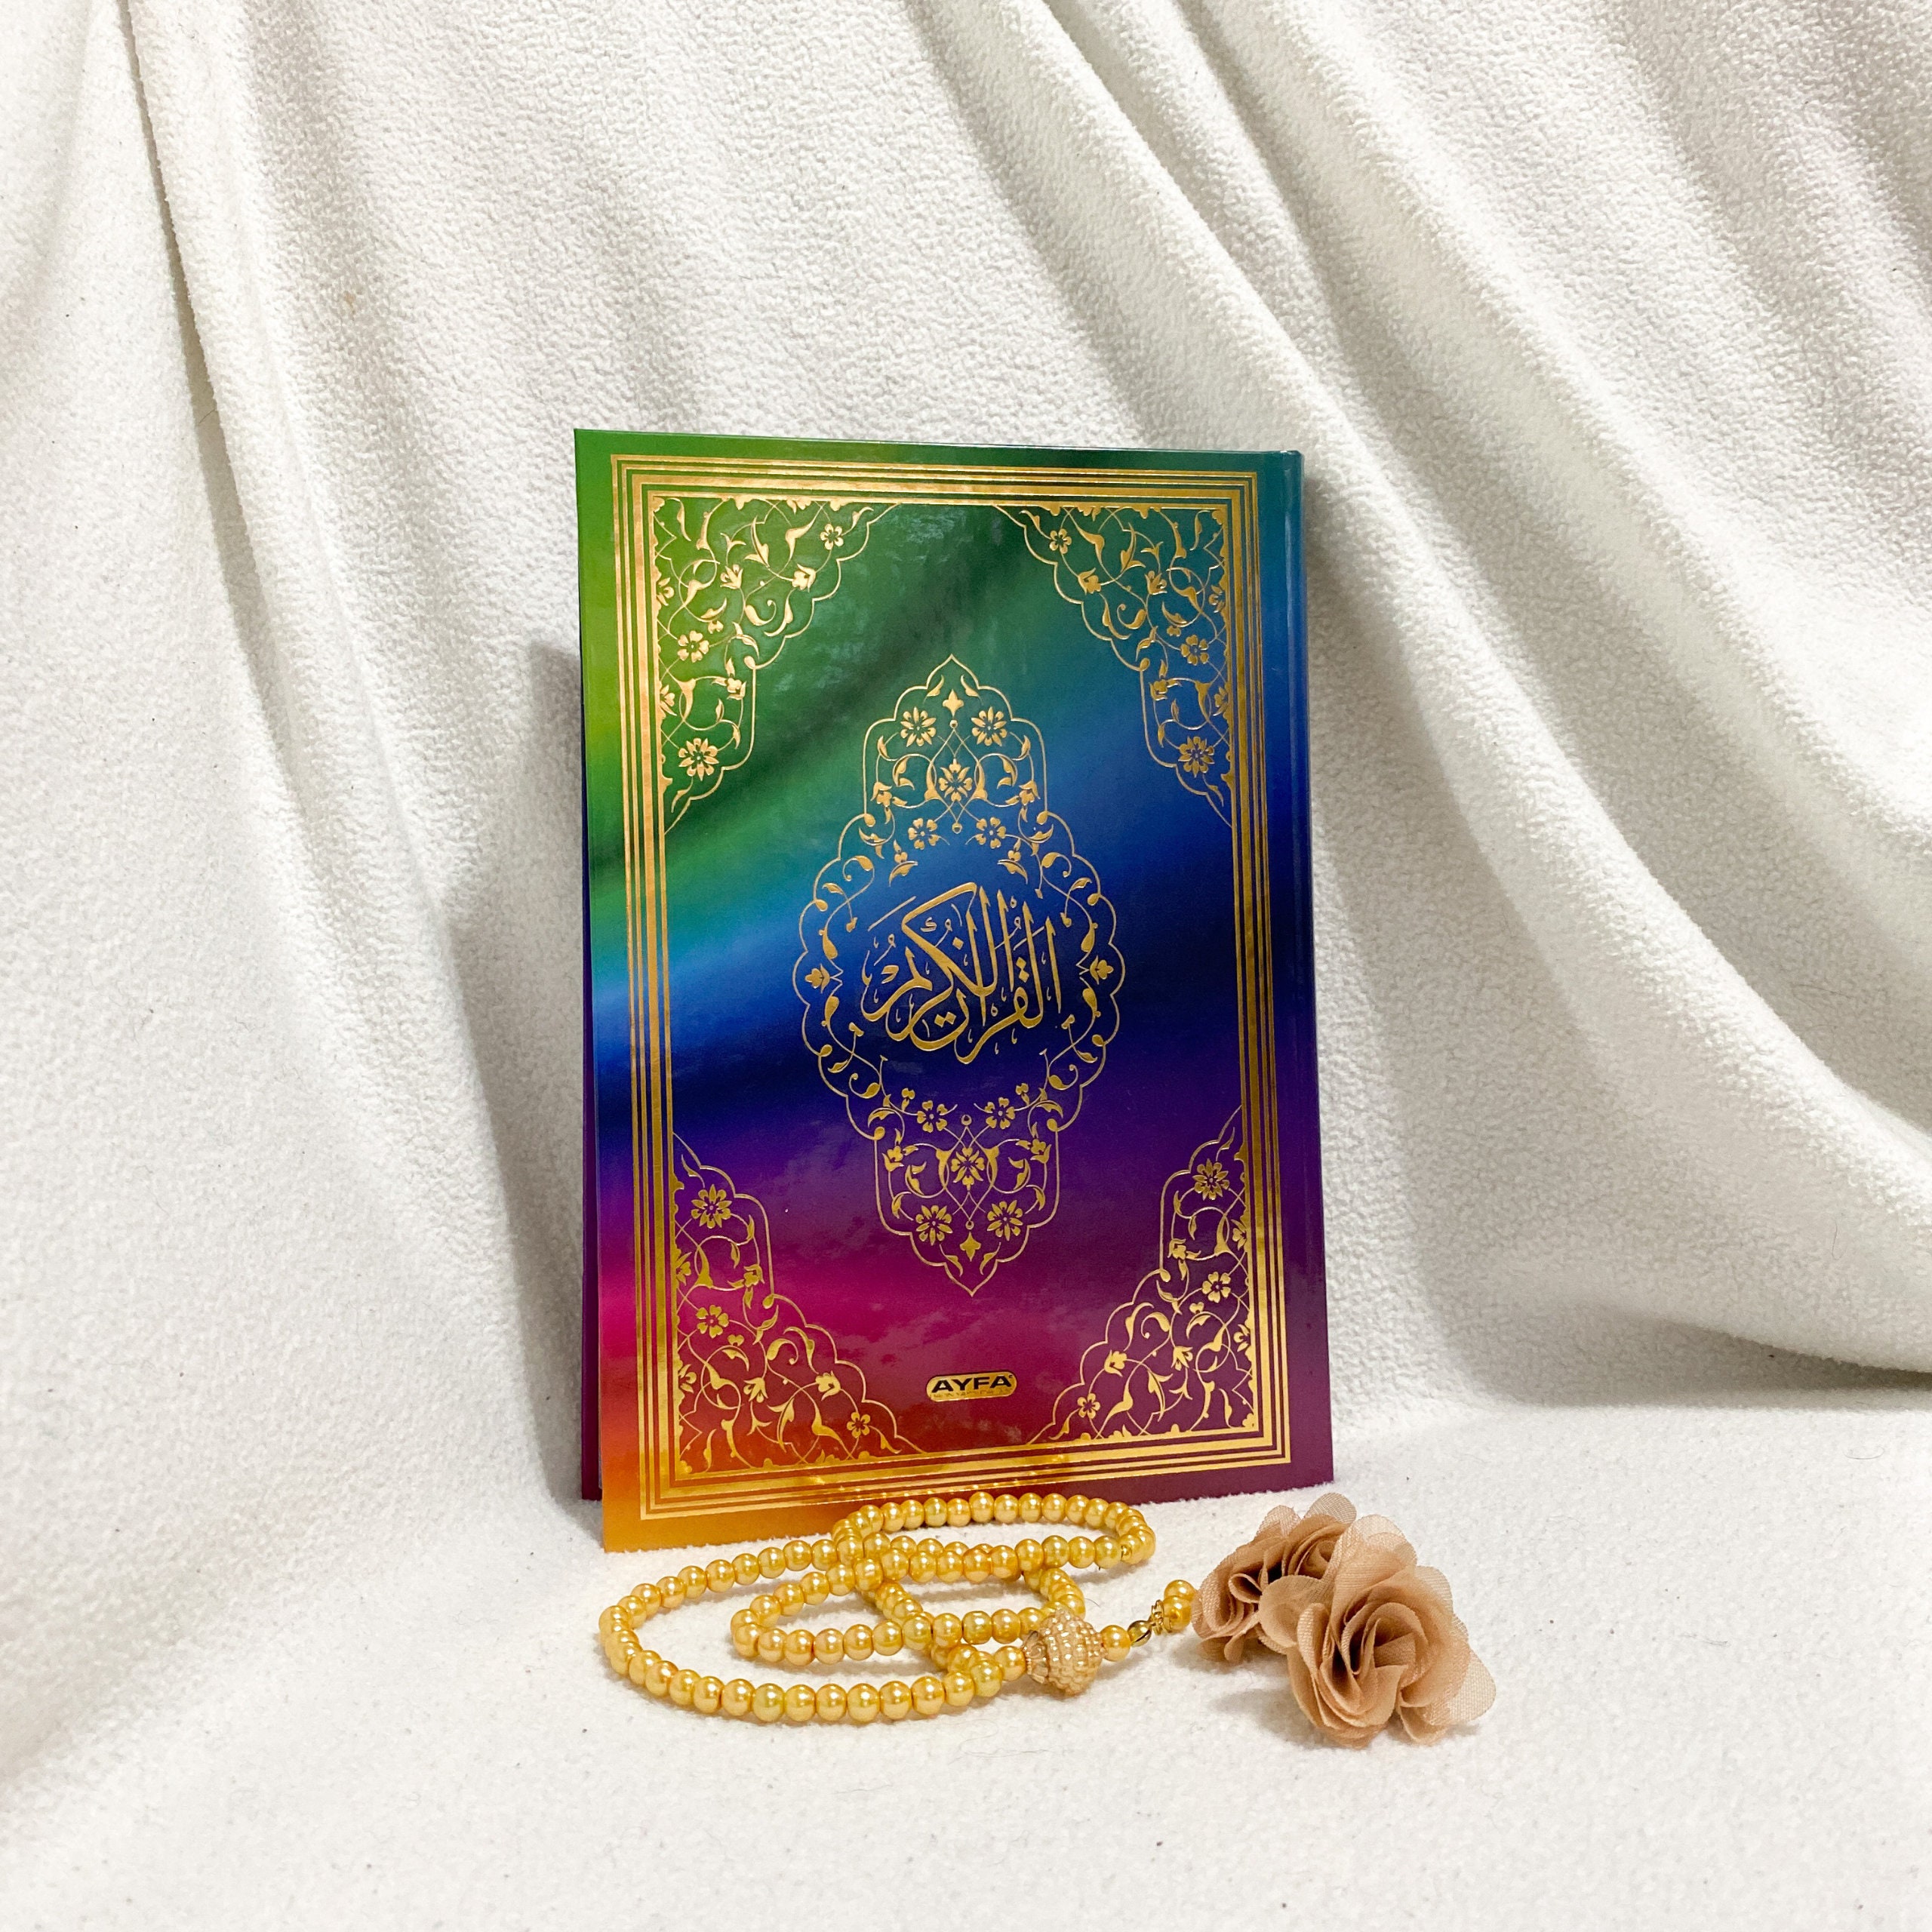 Regenbogen Koran Set Regenbogen Koran Tasbeeh Islamisches Geschenk Set  Islamisches Abschlussgeschenk Islamisches Hauptgeschenk Islamisches  Geschenk für Muslim - .de